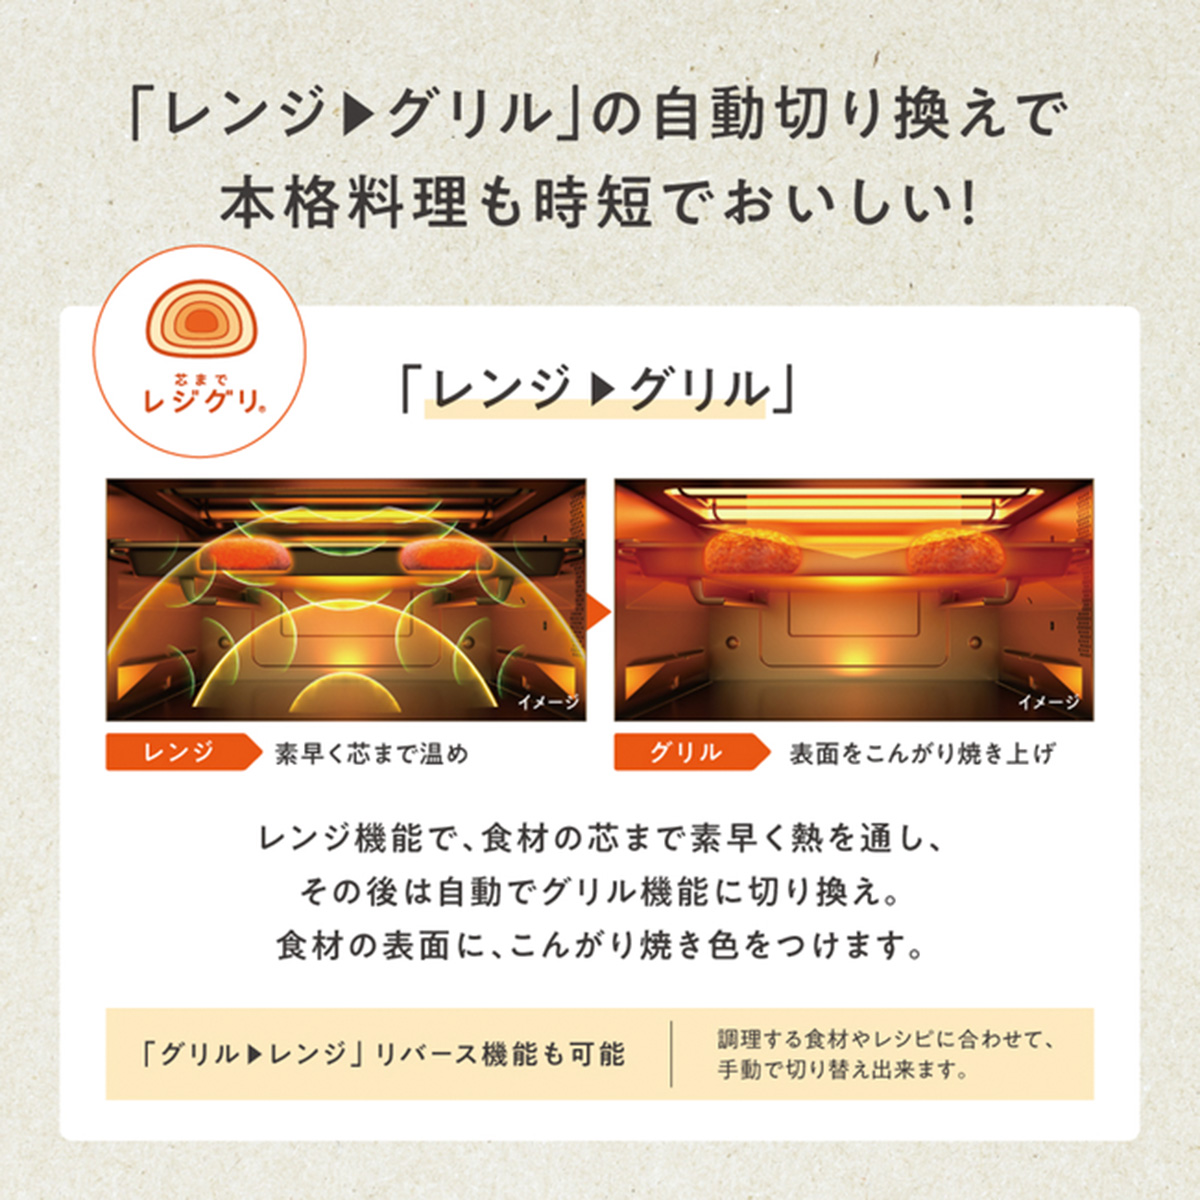 ZOJIRUSHI オーブンレンジ EVERINO エブリノ 26L スレートブラック